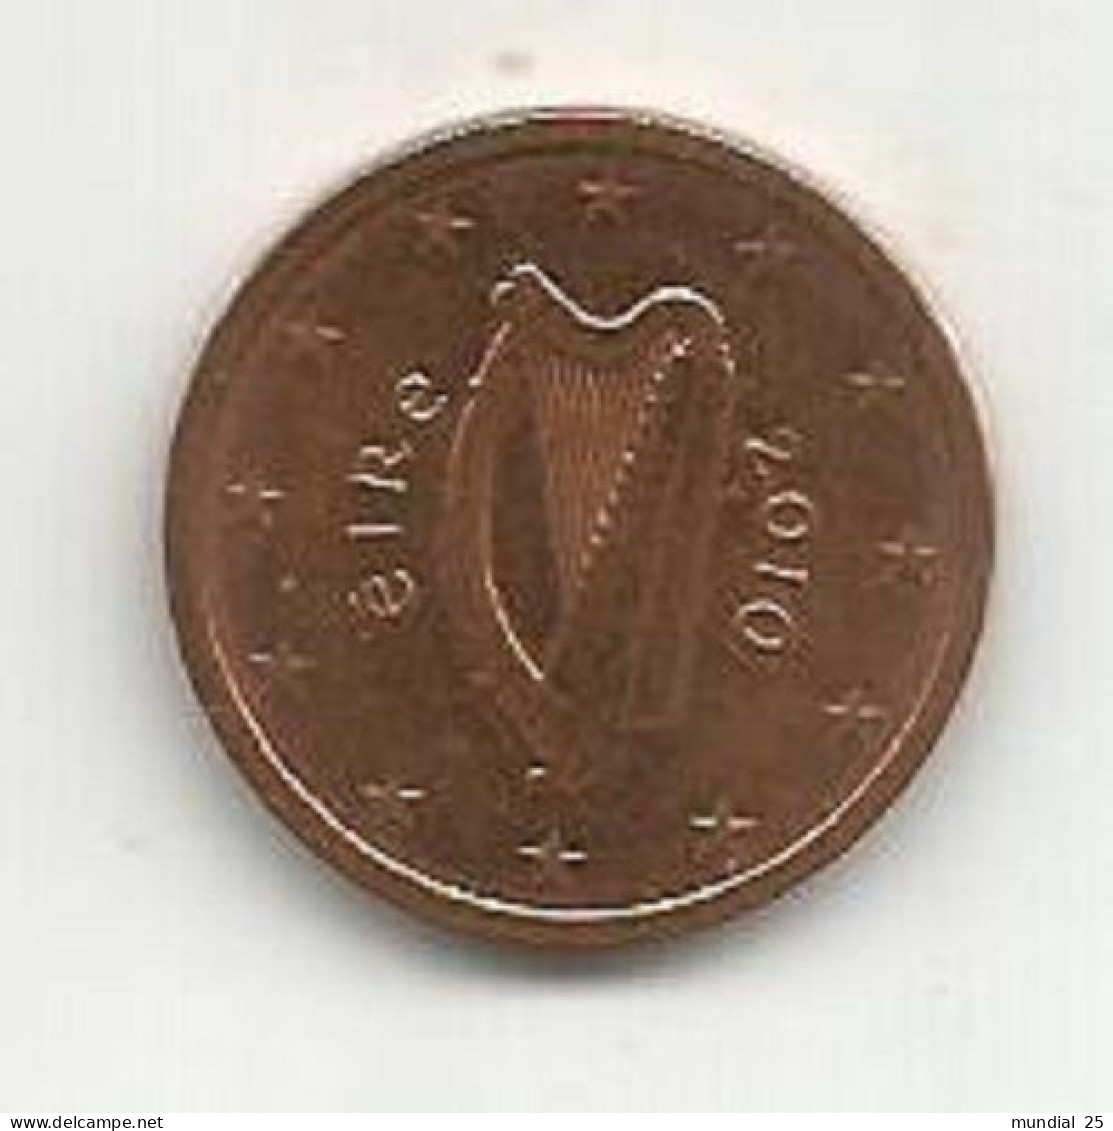 IRELAND 2 EURO CENT 2010 - Irland